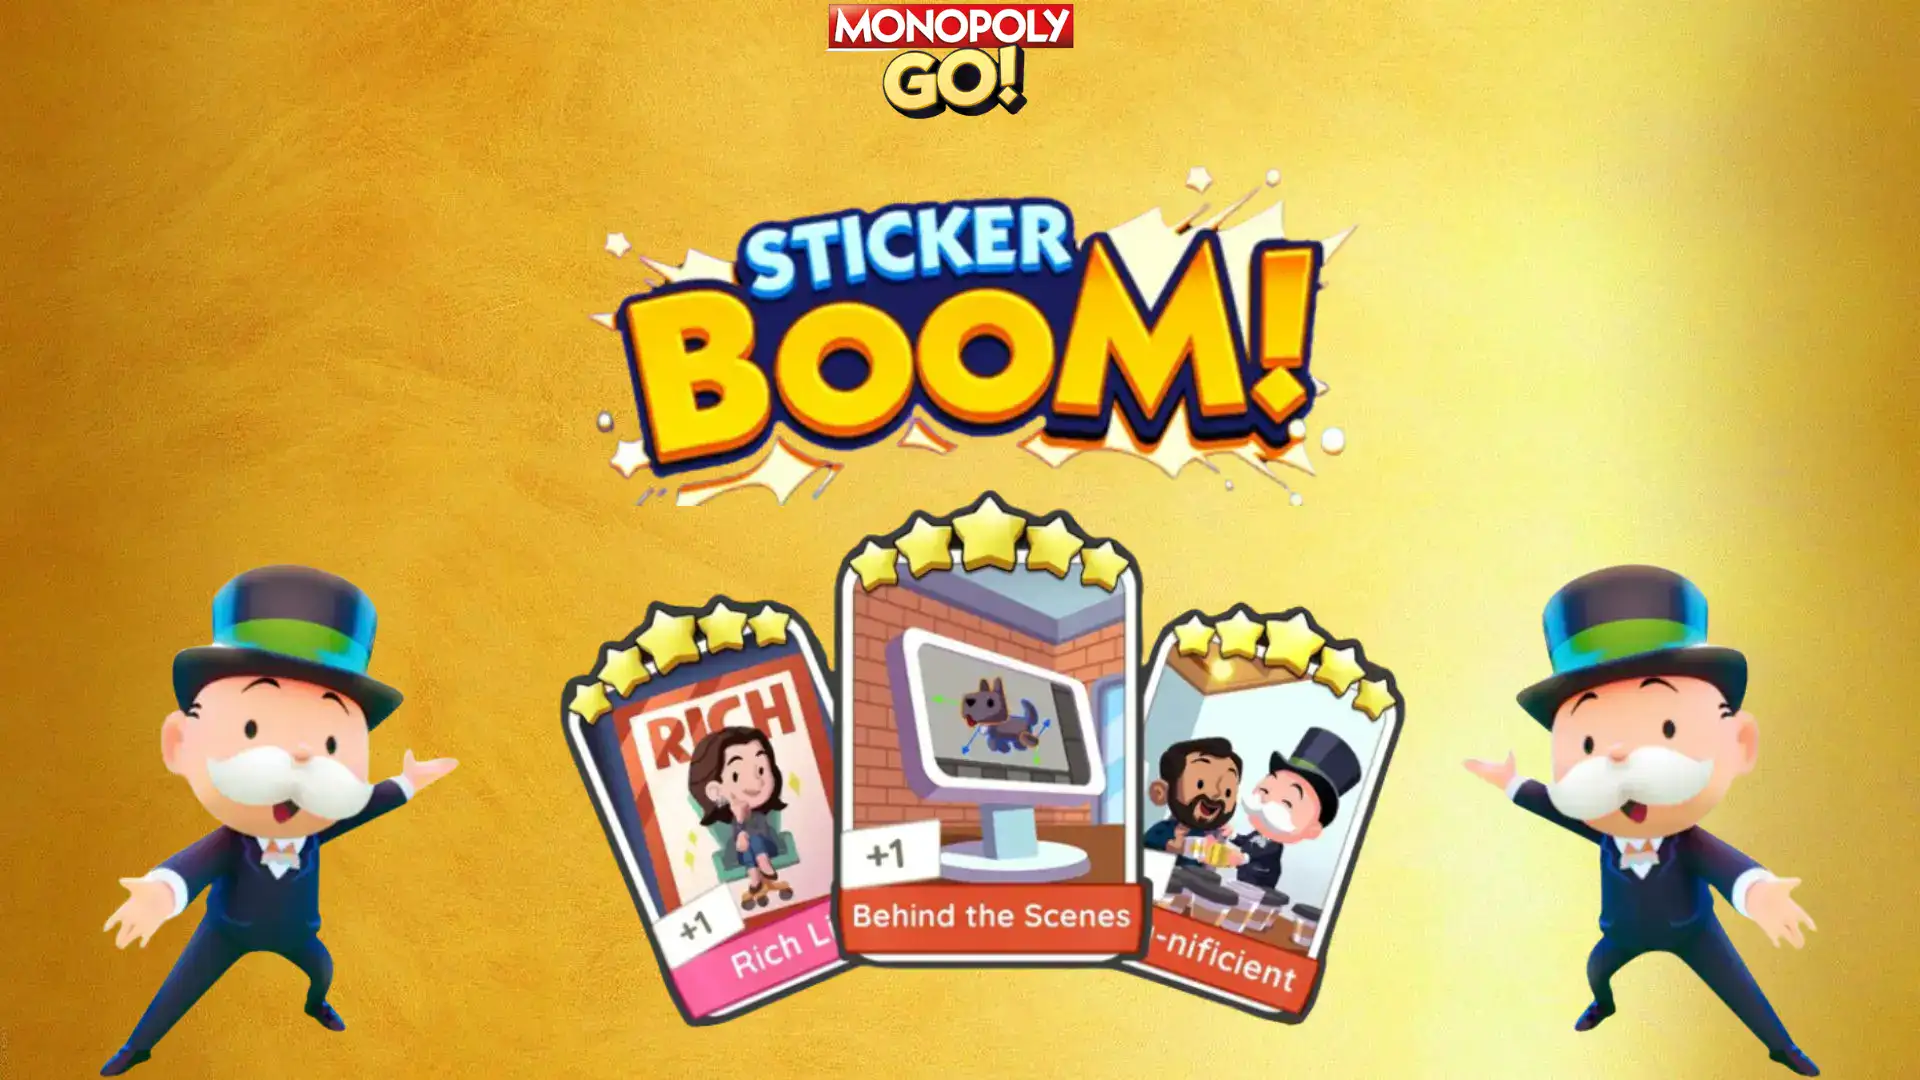 monopoly go sticker boom